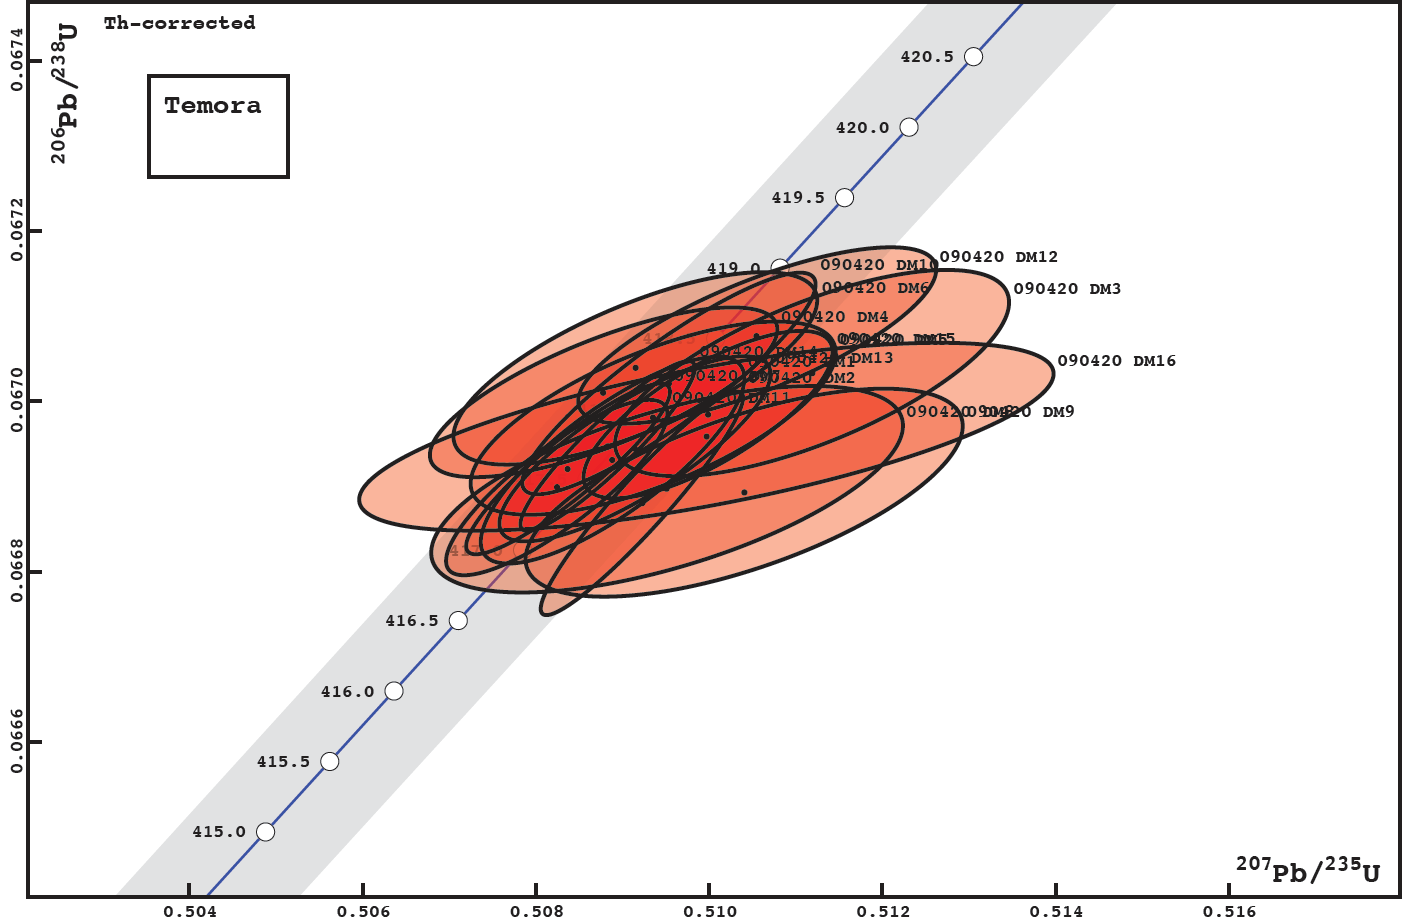 plot showing single crystal U-Pb analyses on TEMORA zircon